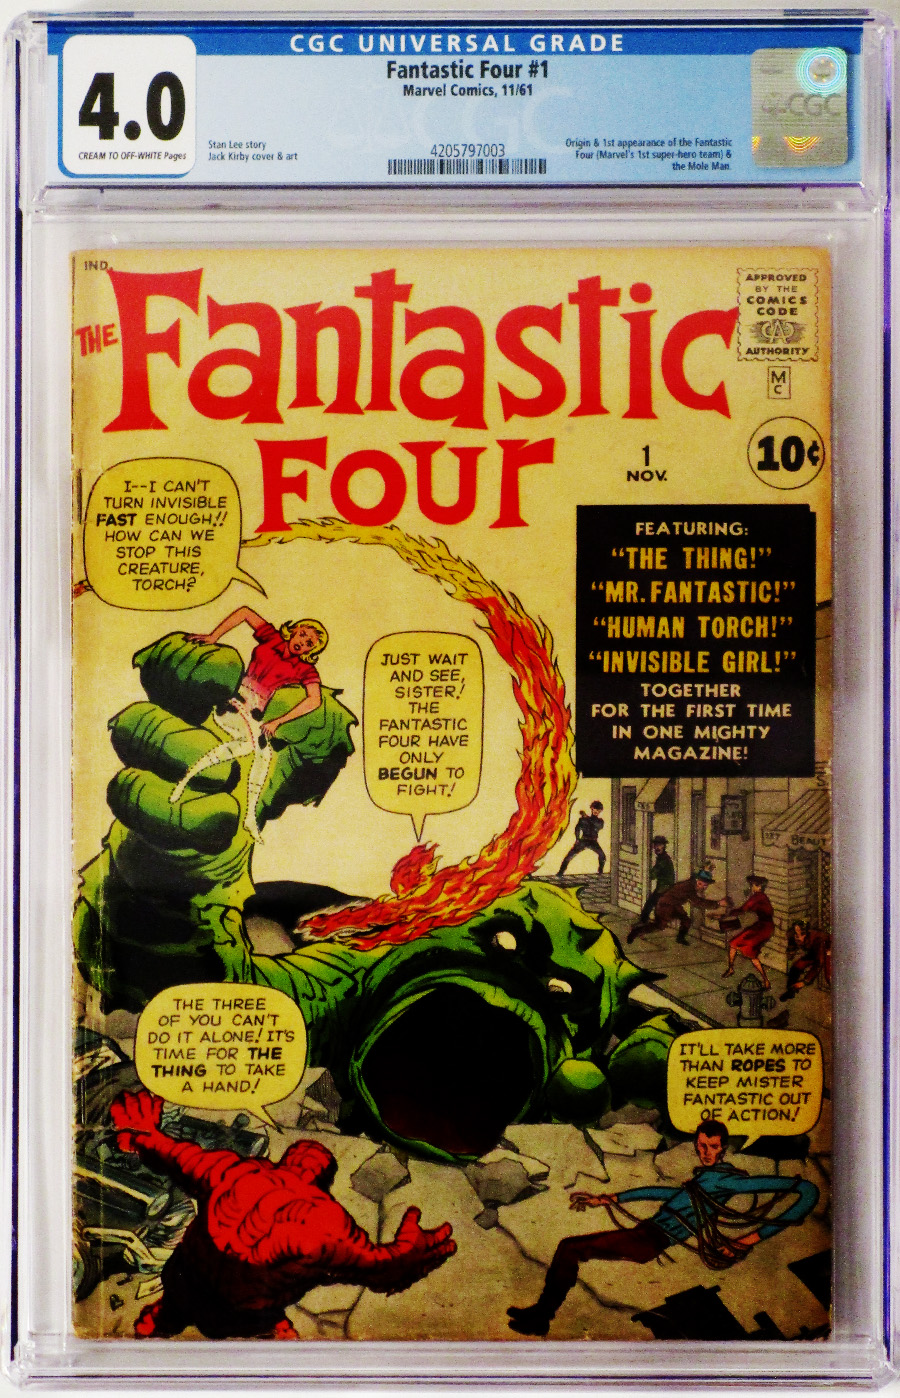 Fantastic Four #1 Cover E CGC 4.0